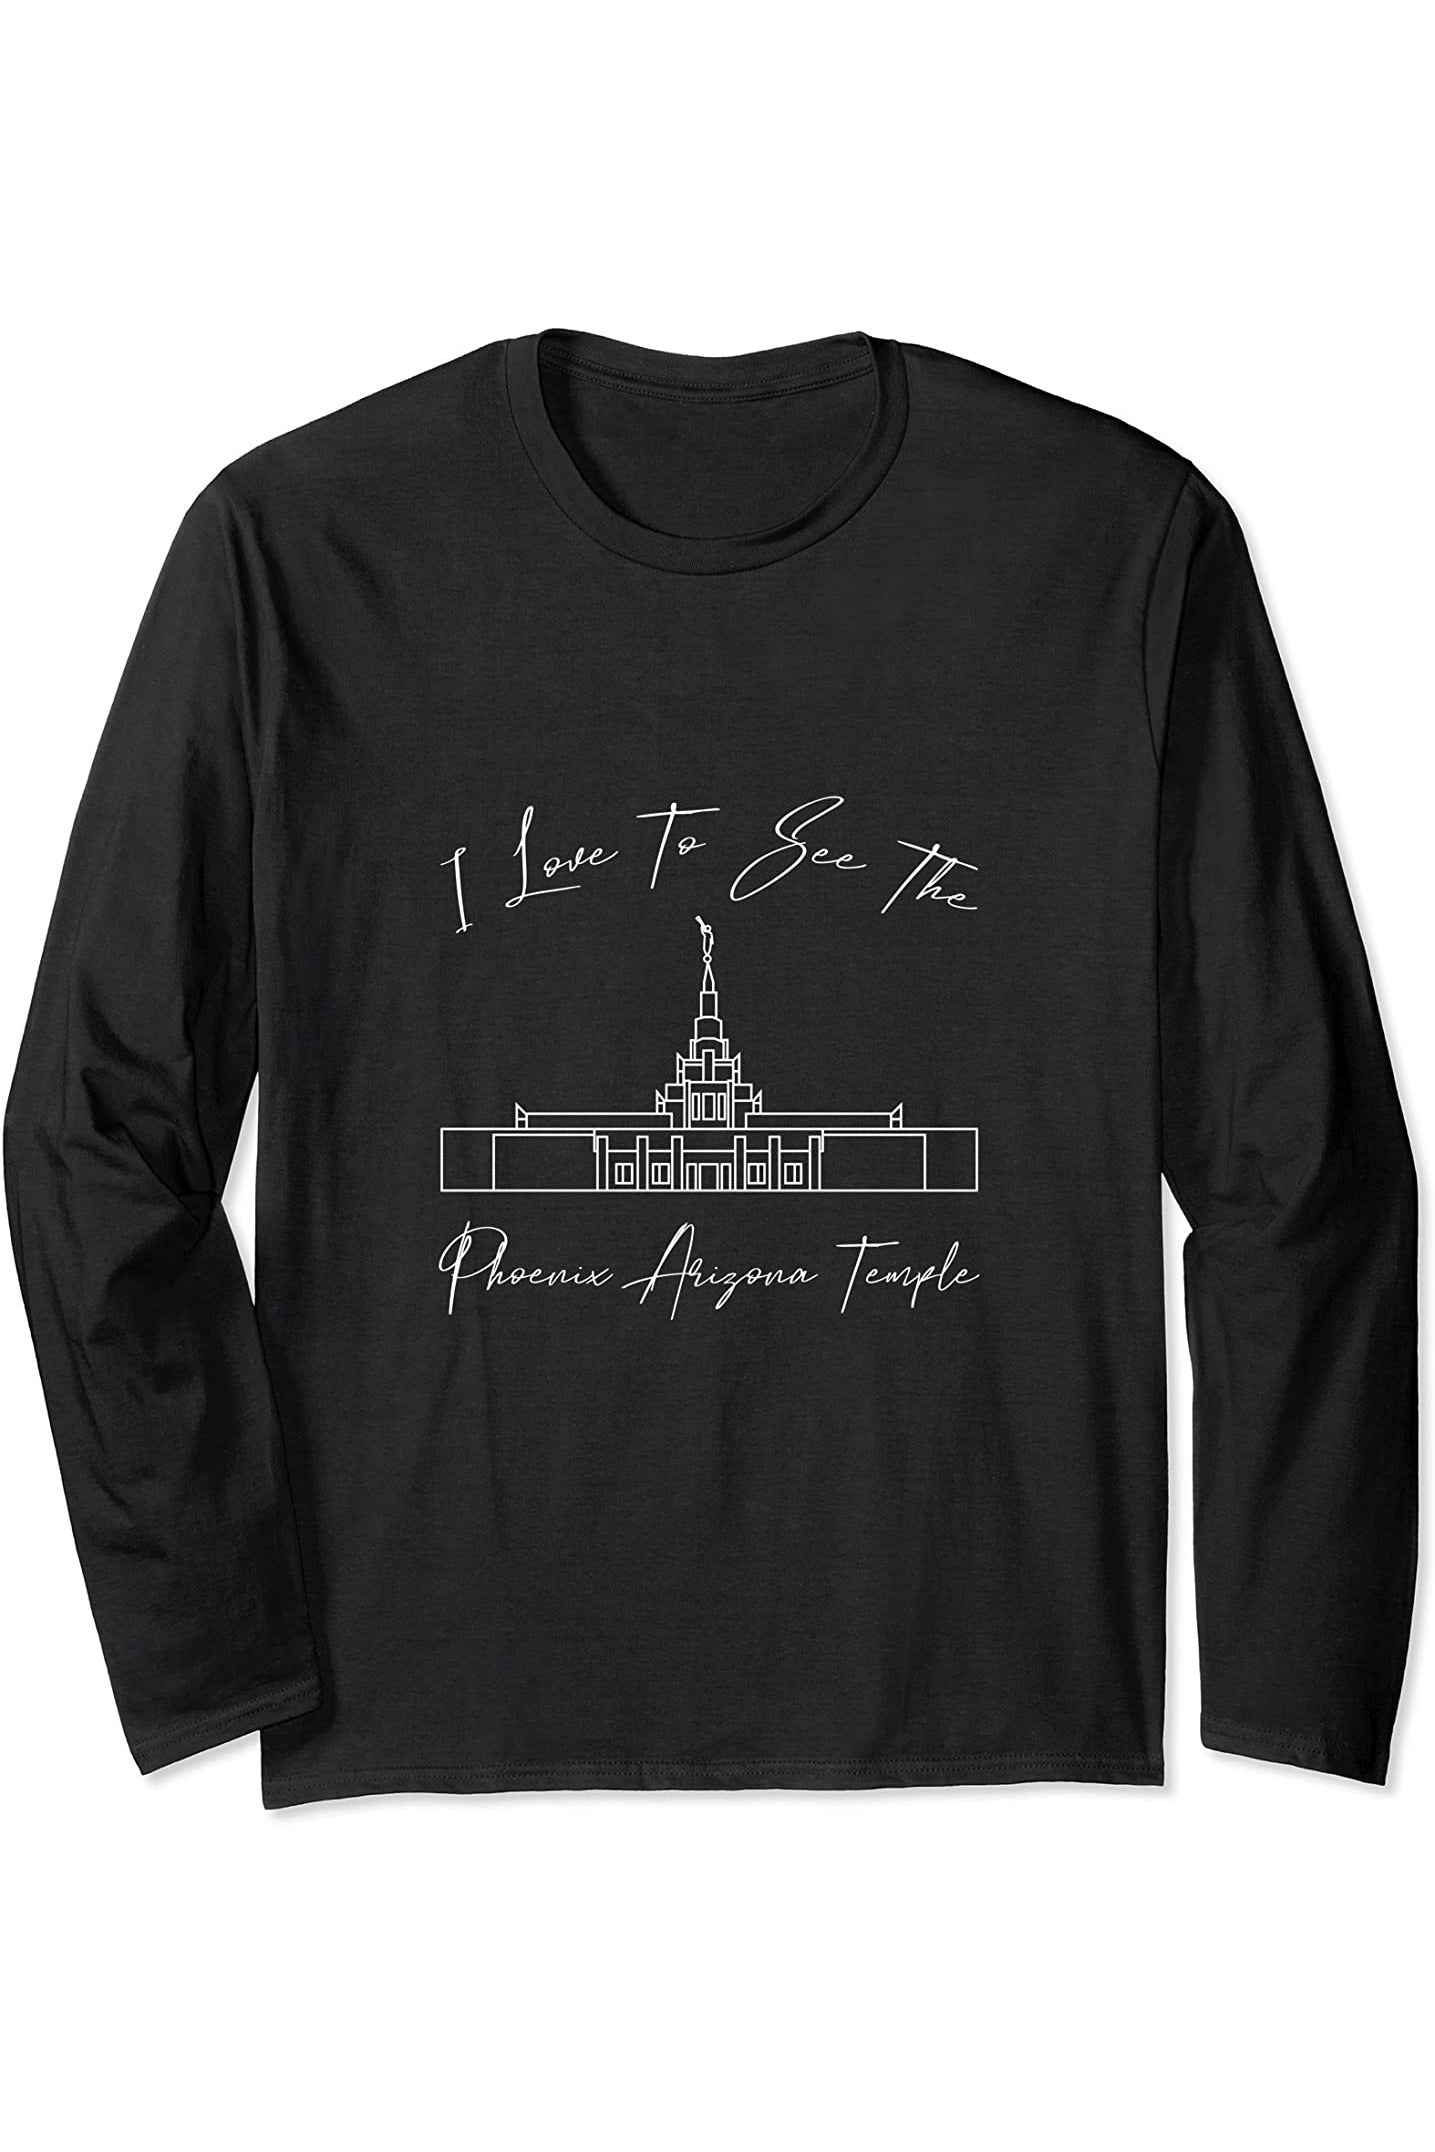 Phoenix Arizona Temple Long Sleeve T-Shirt - Calligraphy Style (English) US